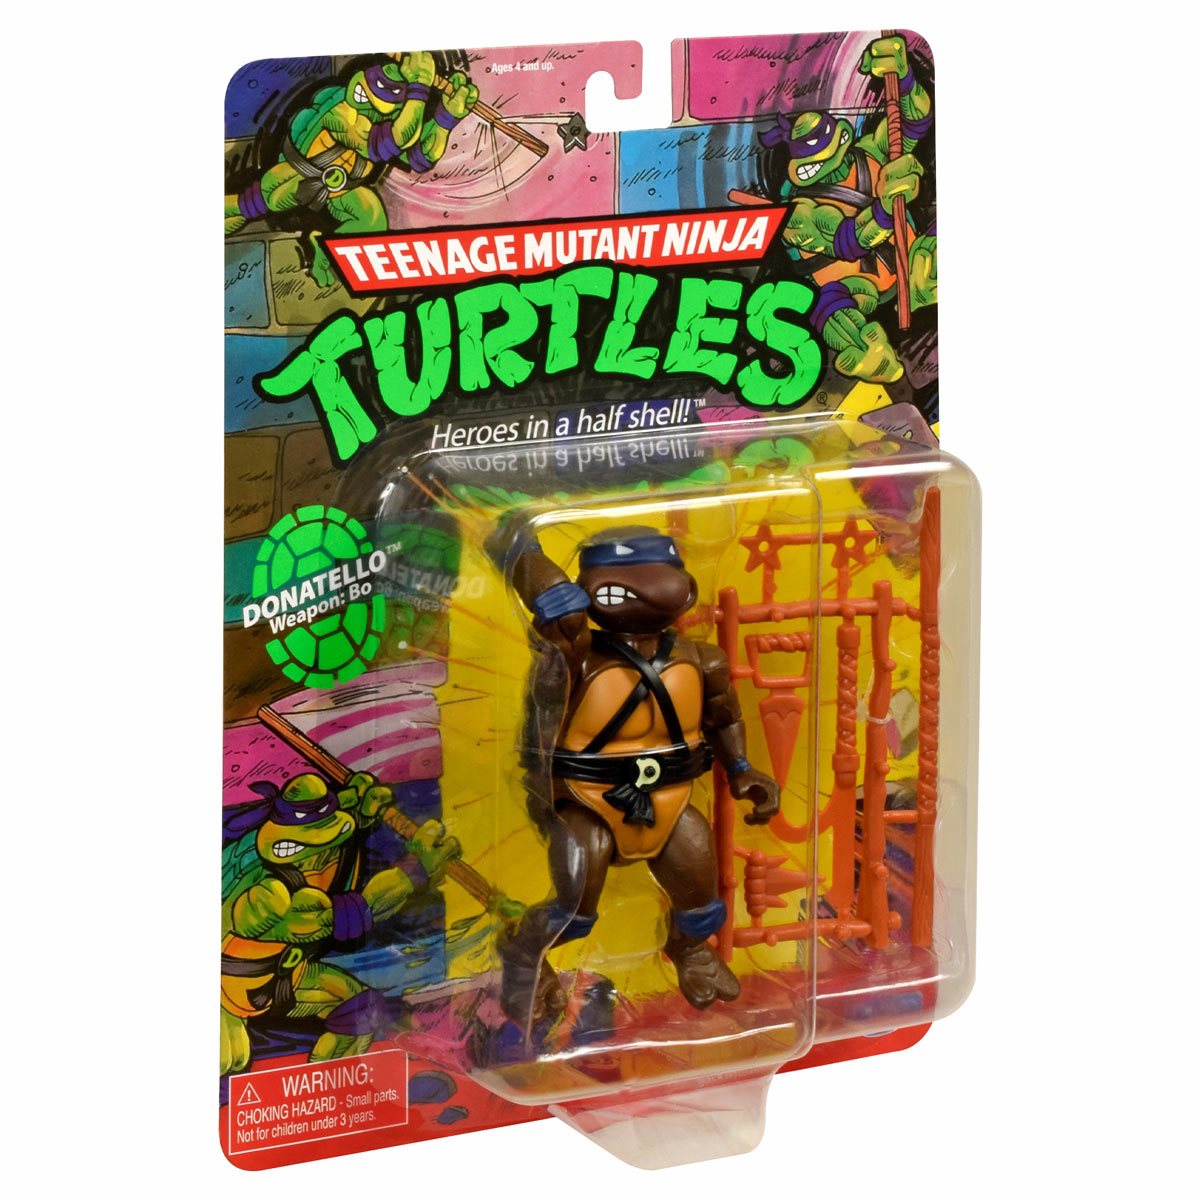 Donatello (Classic) – Youtooz Collectibles